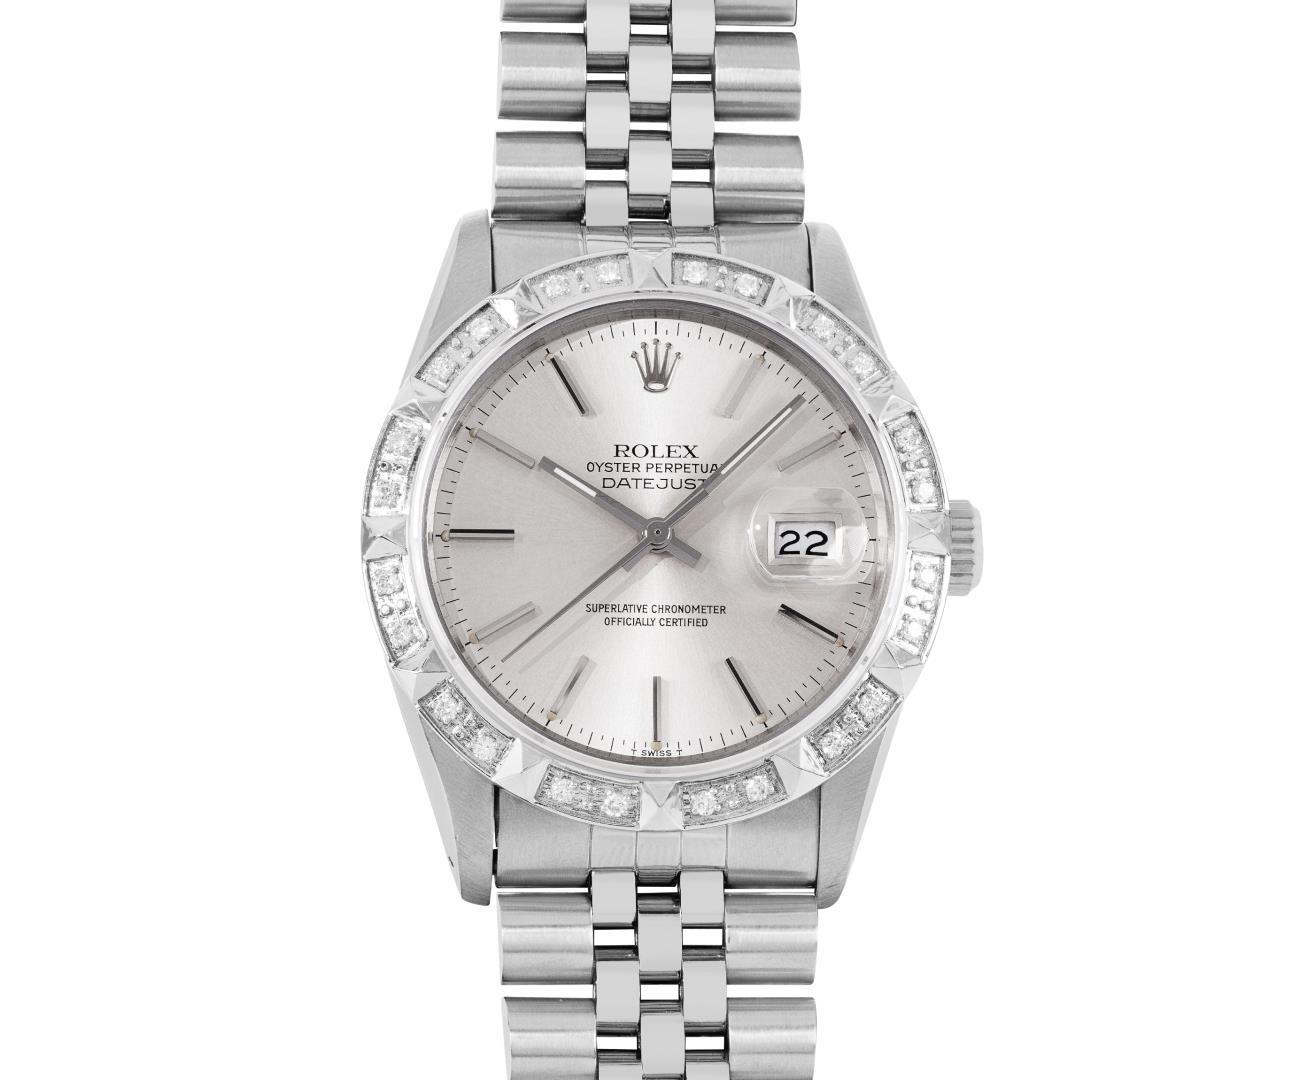 Rolex Mens Stainless Steel Silver Index Diamond Datejust Wristwatch With Rolex Box